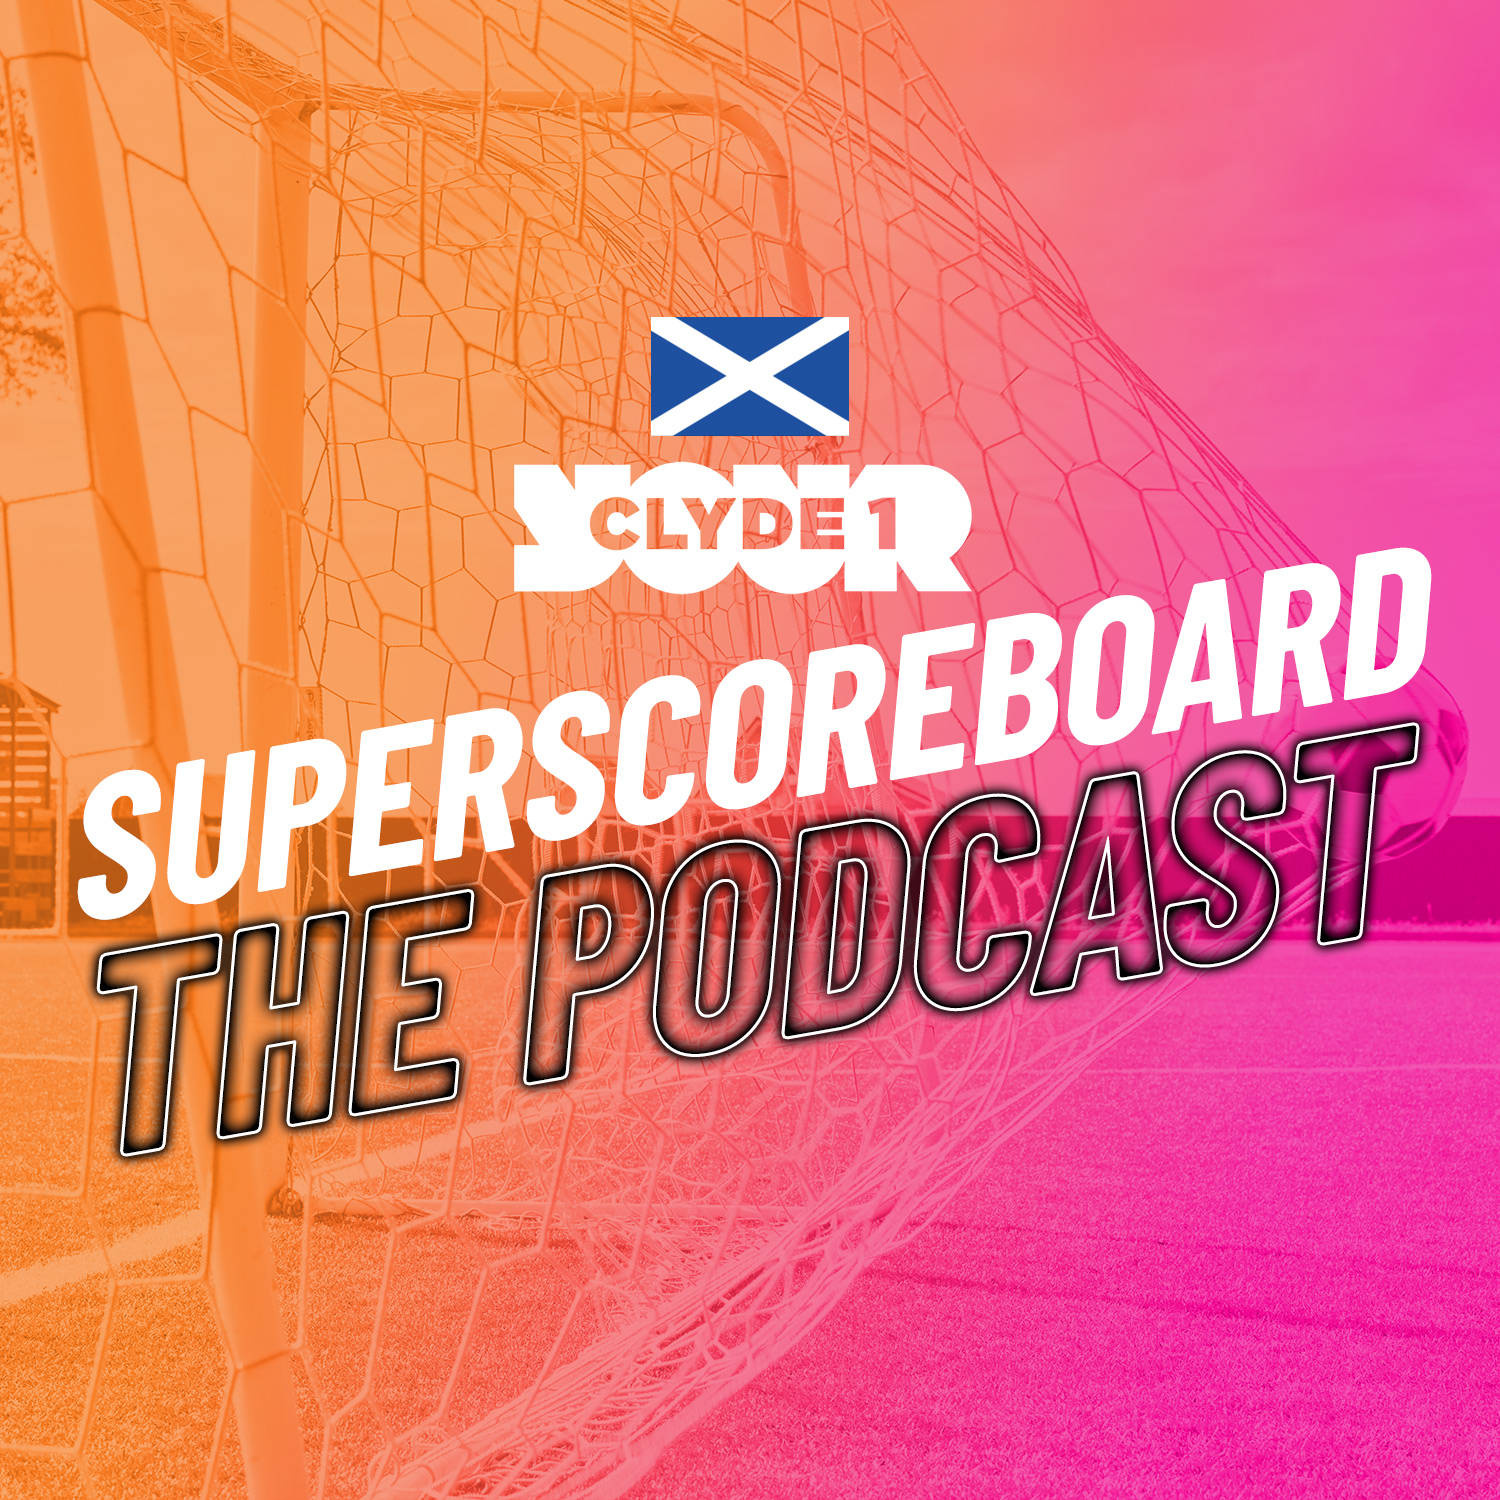 Saturday 15th June Clyde 1 Superscoreboard